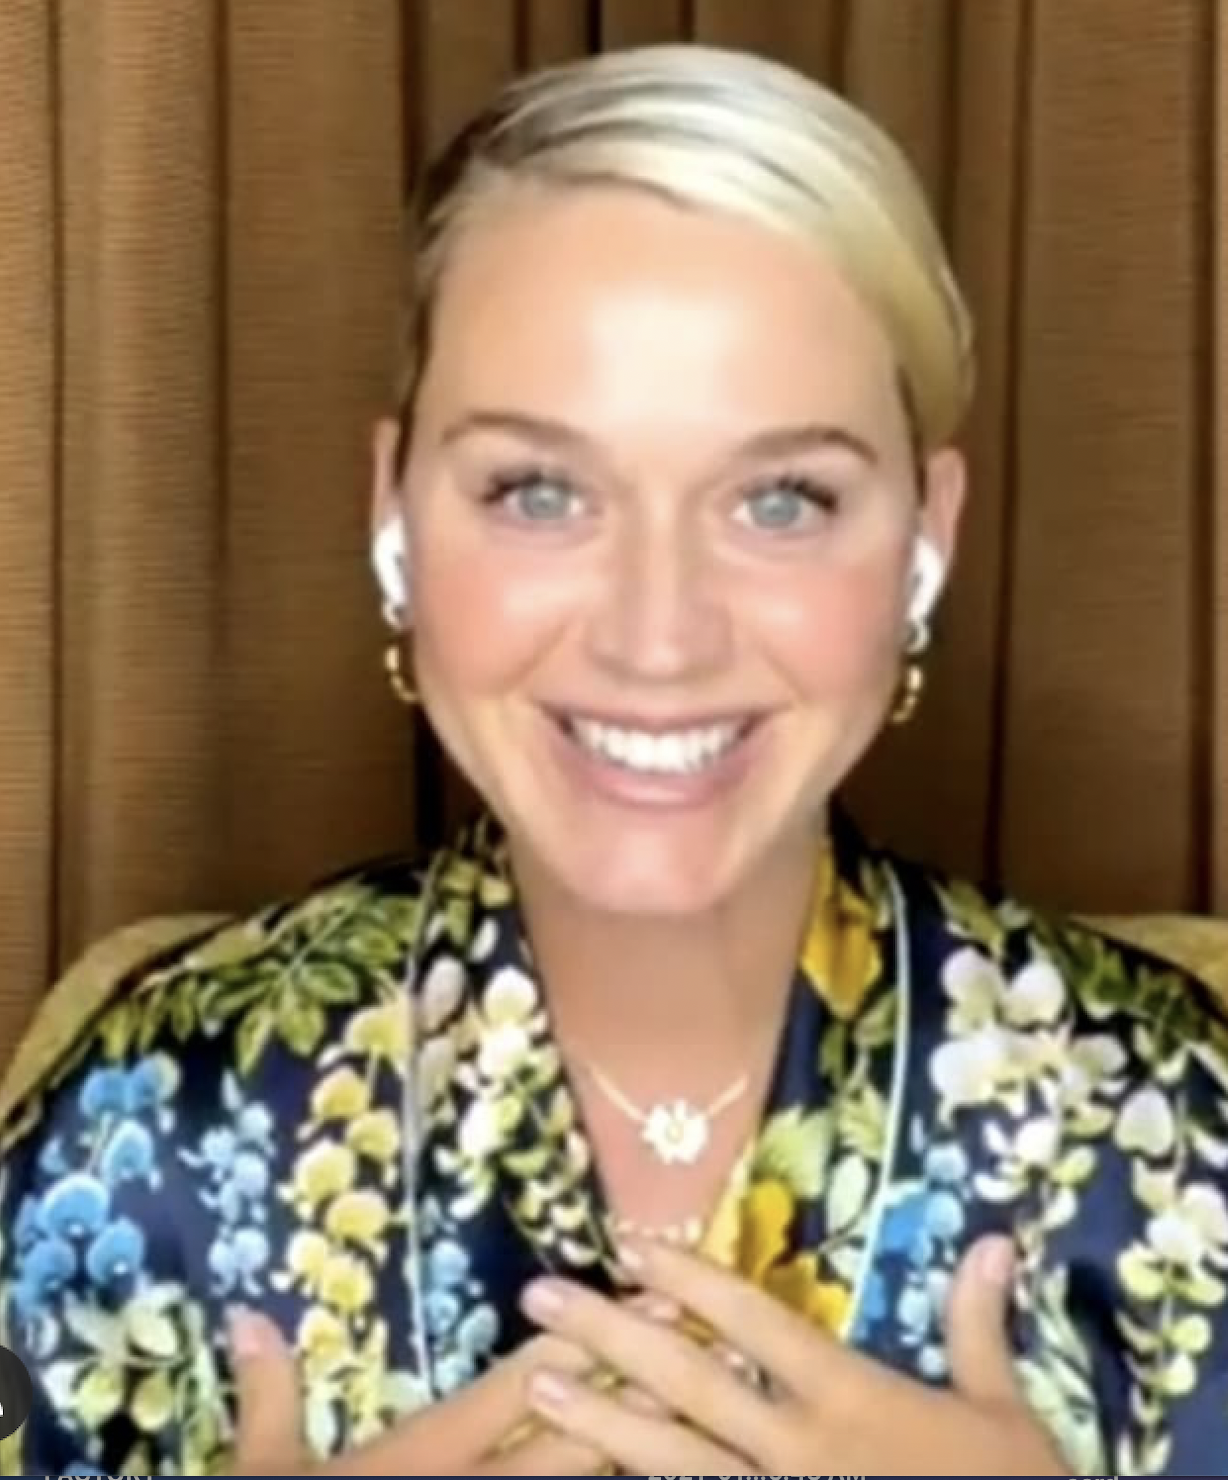 Katy Perry wearing Bonheur Jewelry earrings.